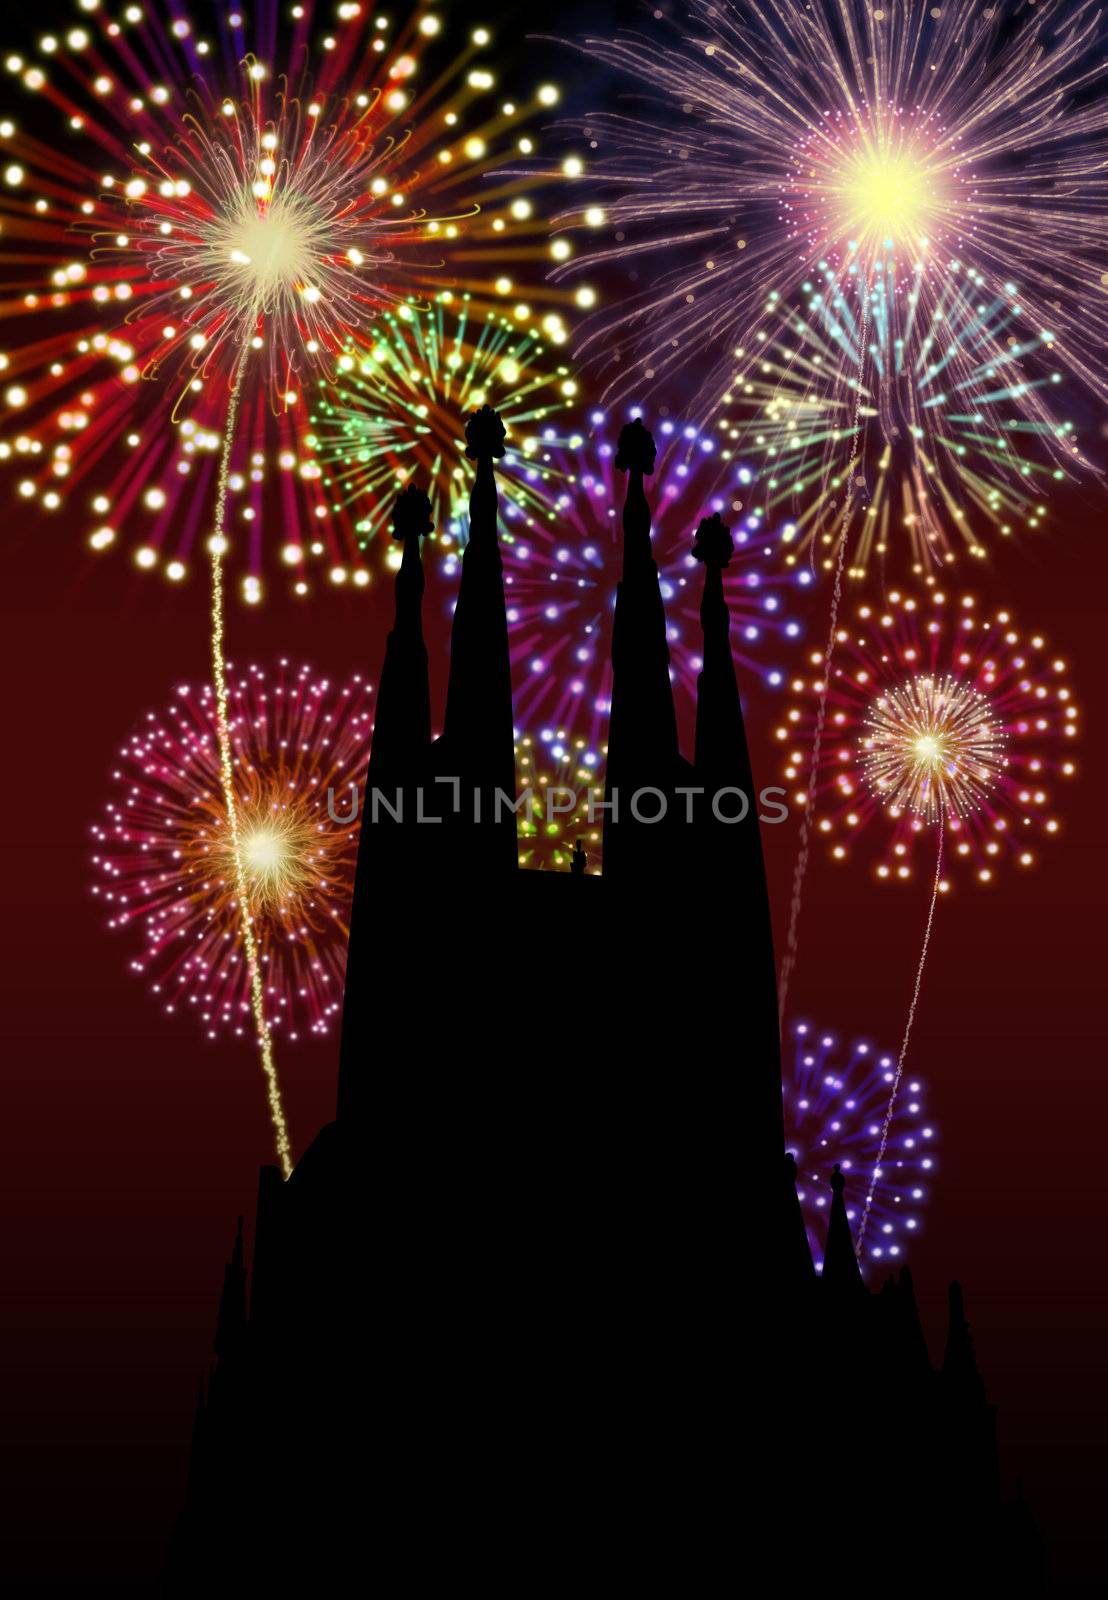 Fireworks Happy New Year Tibidabo Church by cienpies